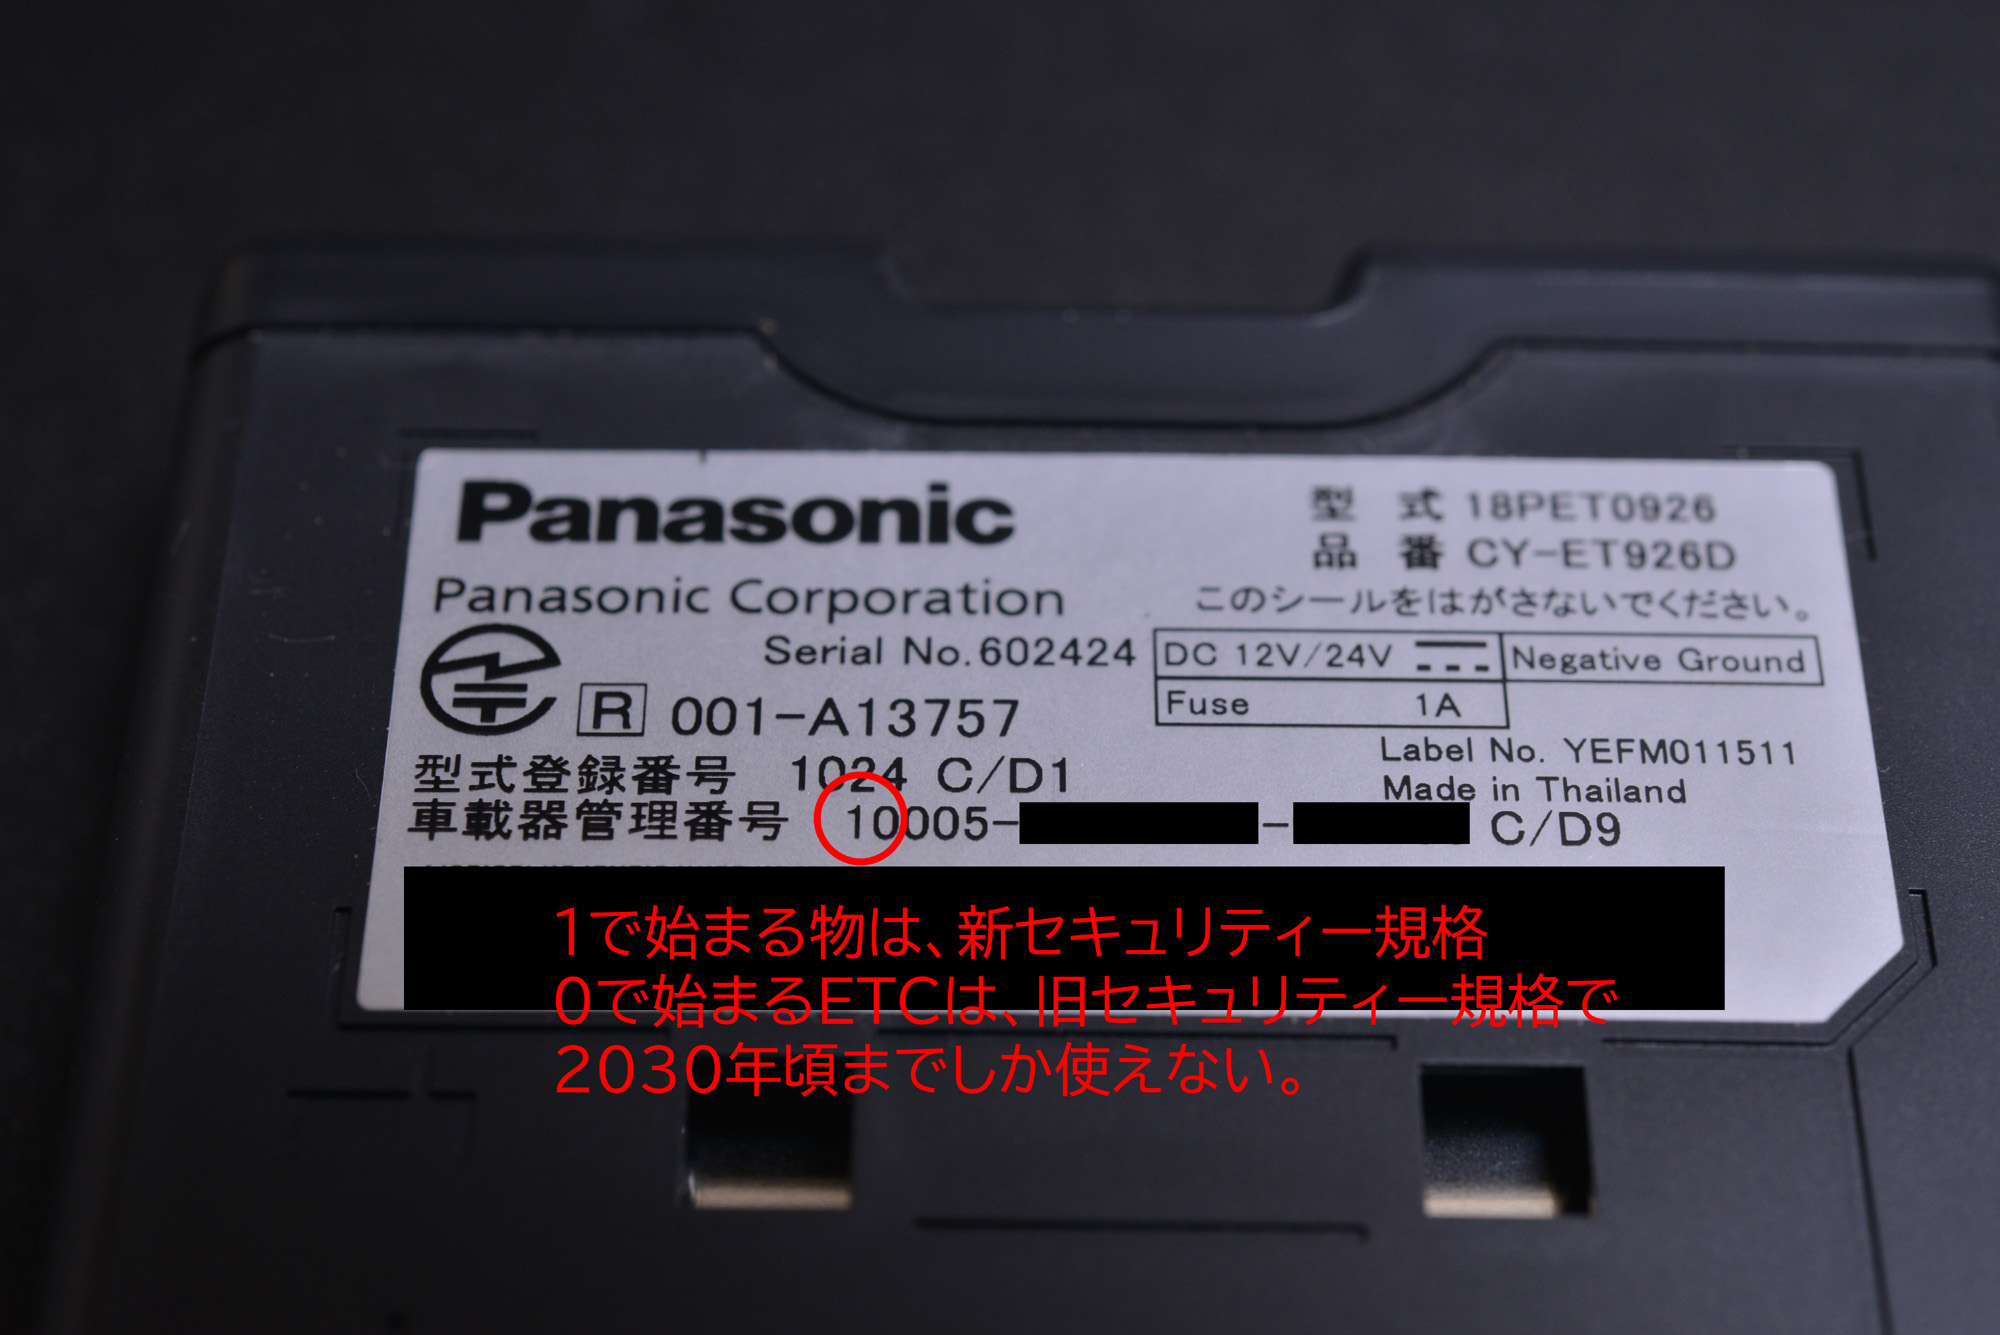 ETC Panasonic CY-ET926D [セットアップ込み]購入しました。 - Dorayaki-papa 貧乏ガレージハウスⅡ